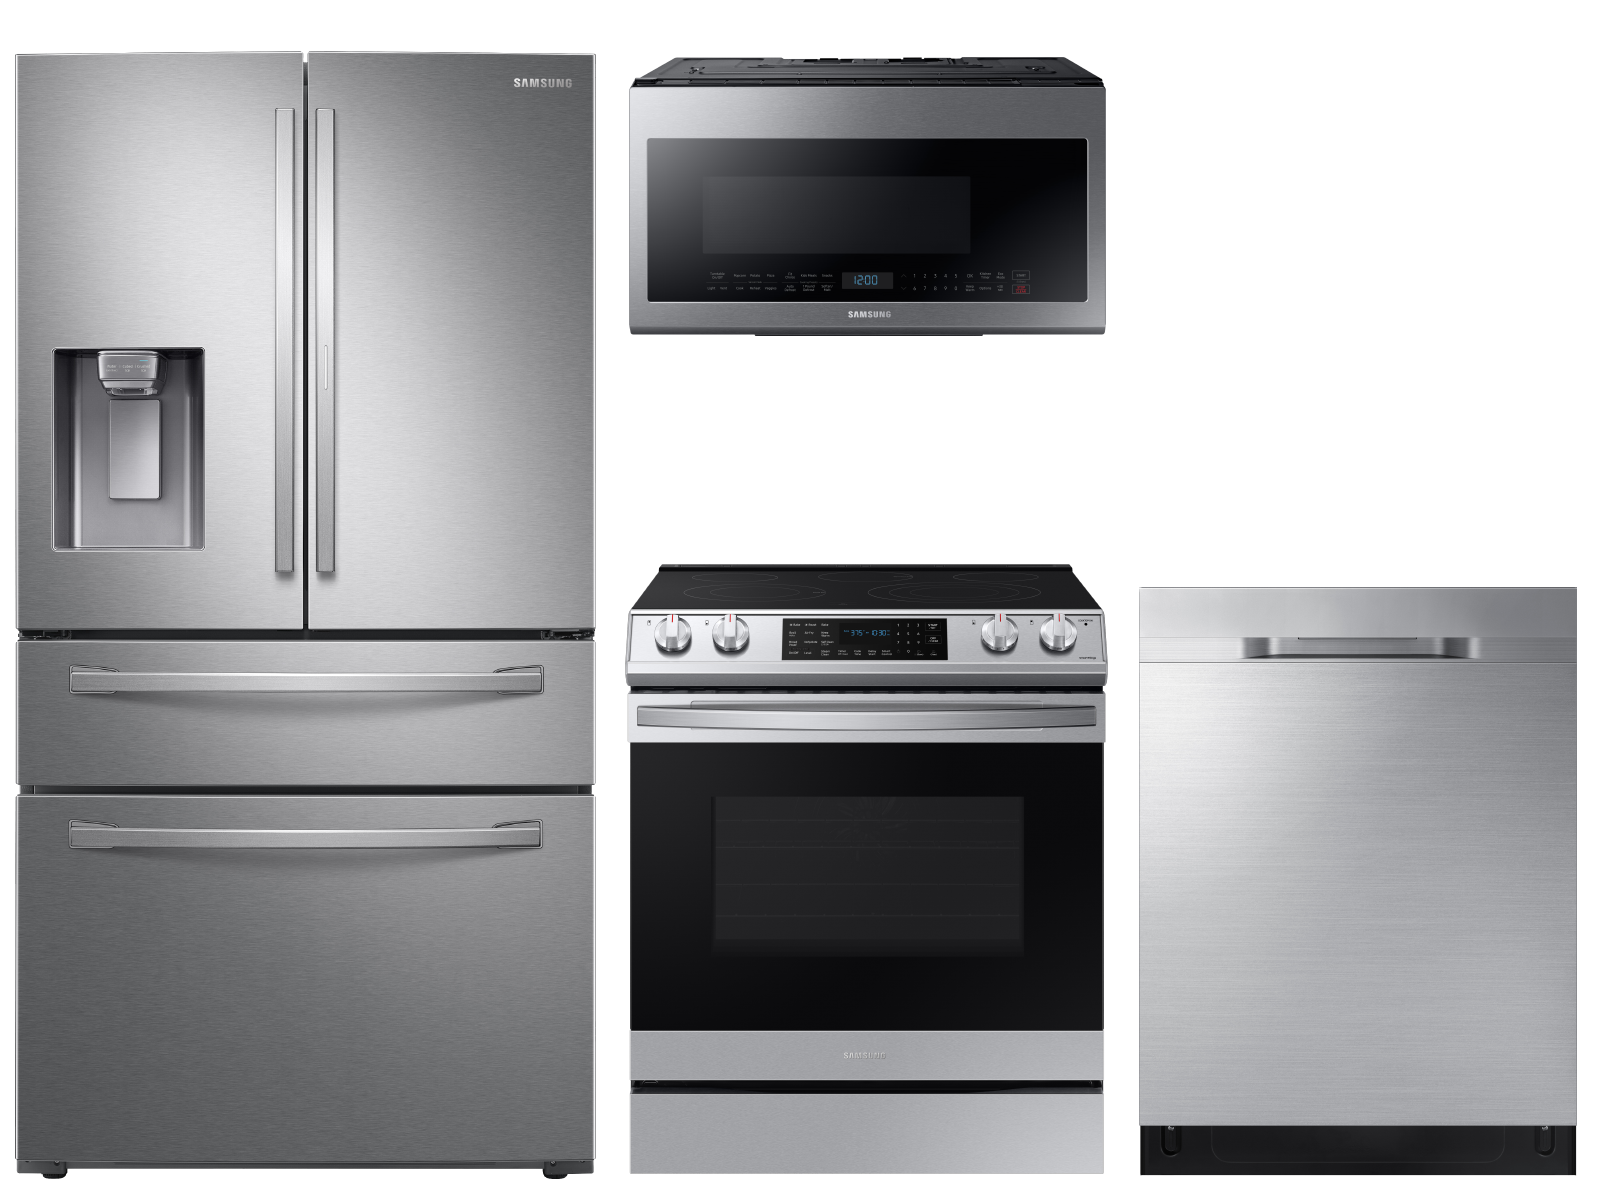 Photos - Fridge Samsung Food Showcase 4-Door Refrigerator + Slide-in Electric Range with A 